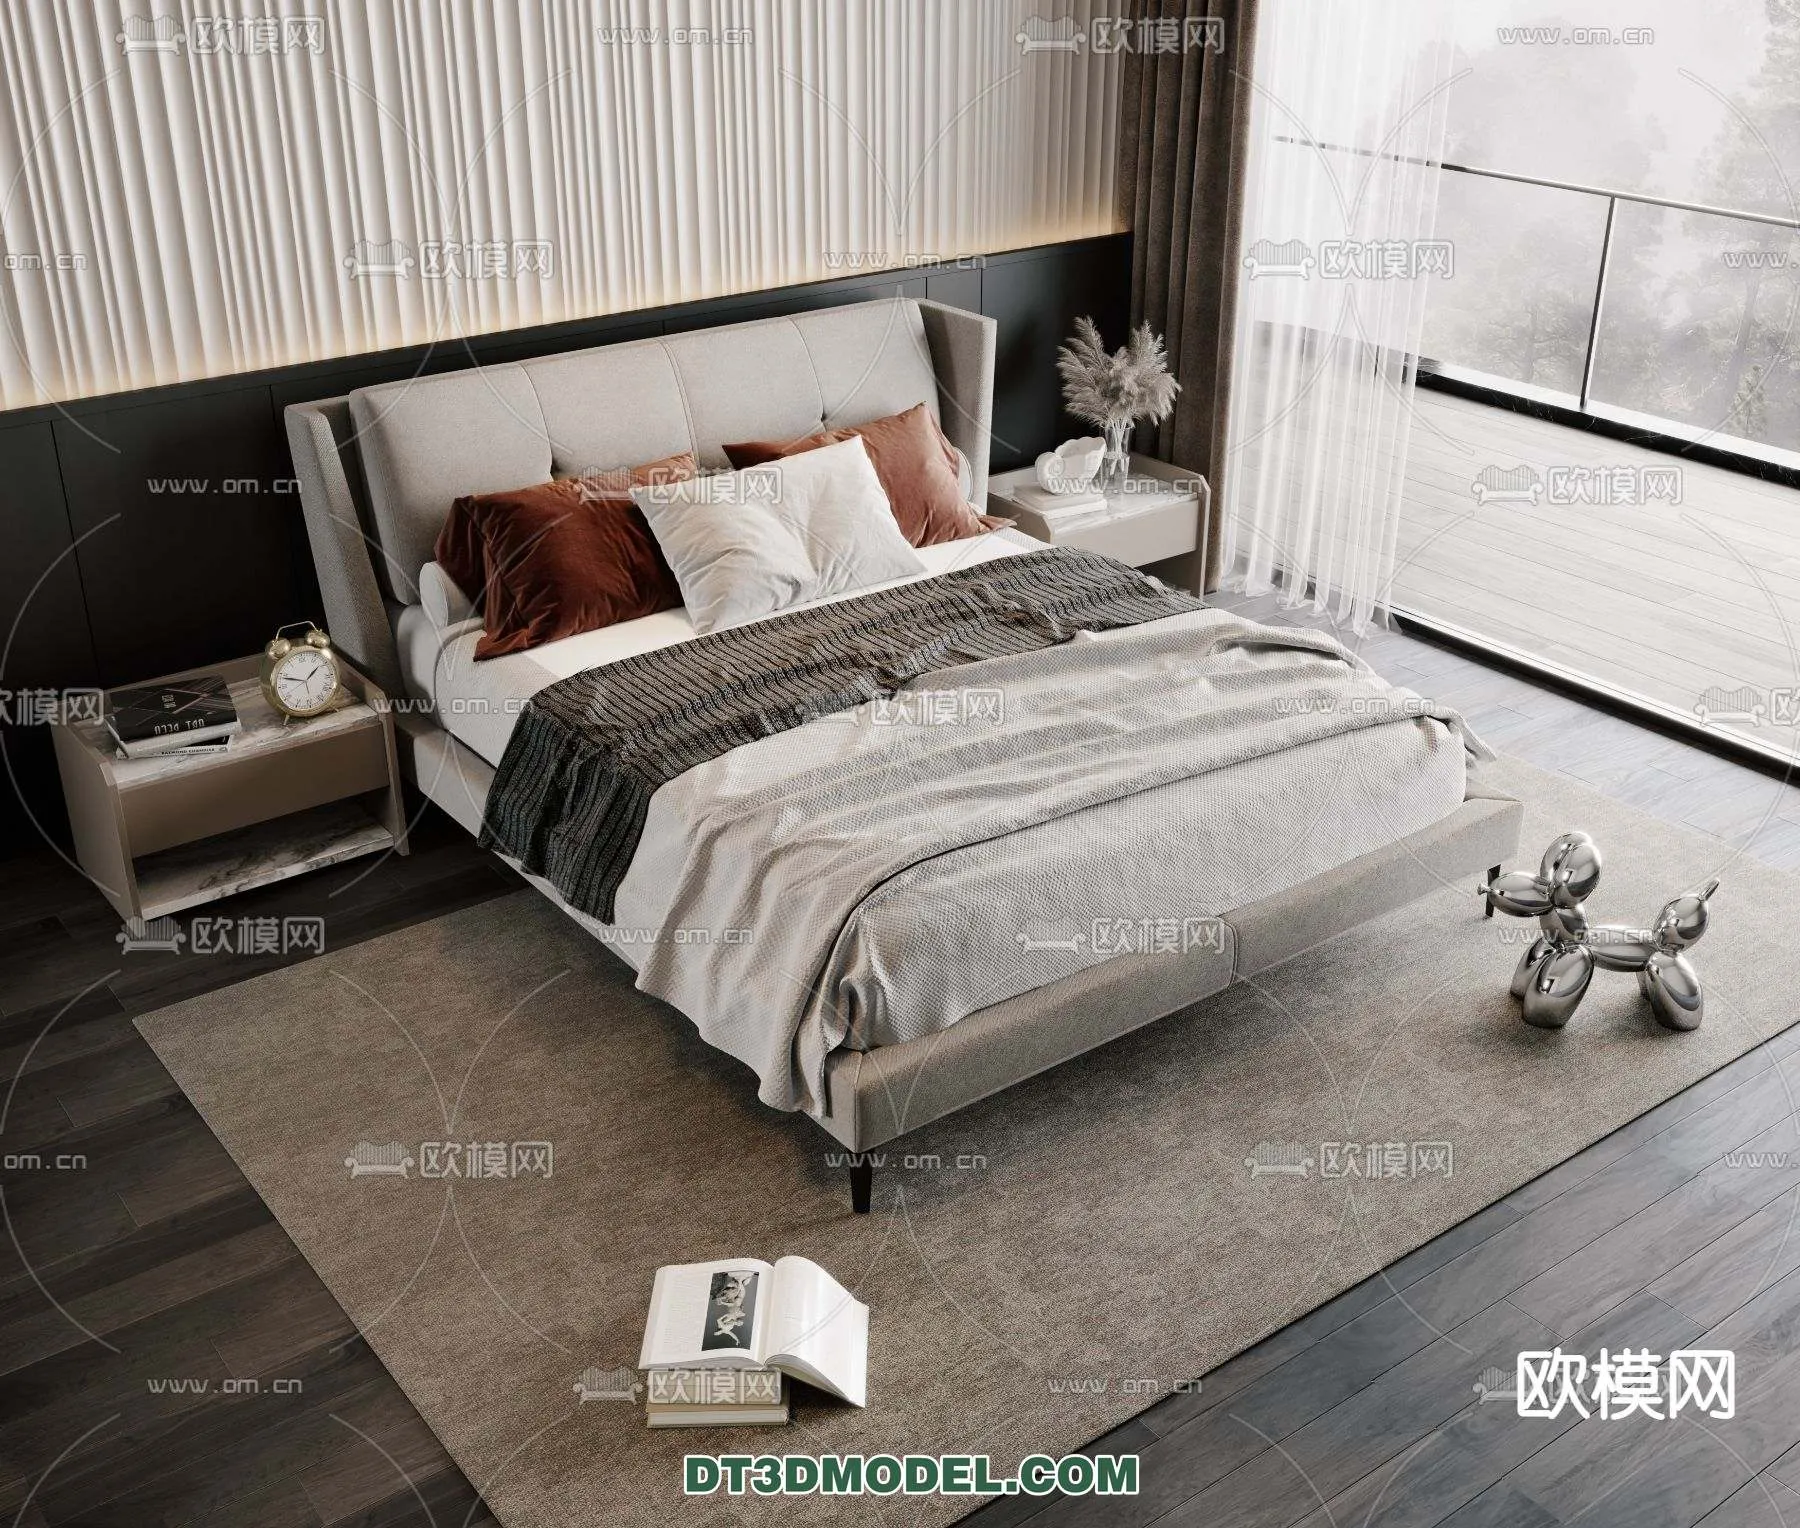 Double Bed 3D Models – 0074